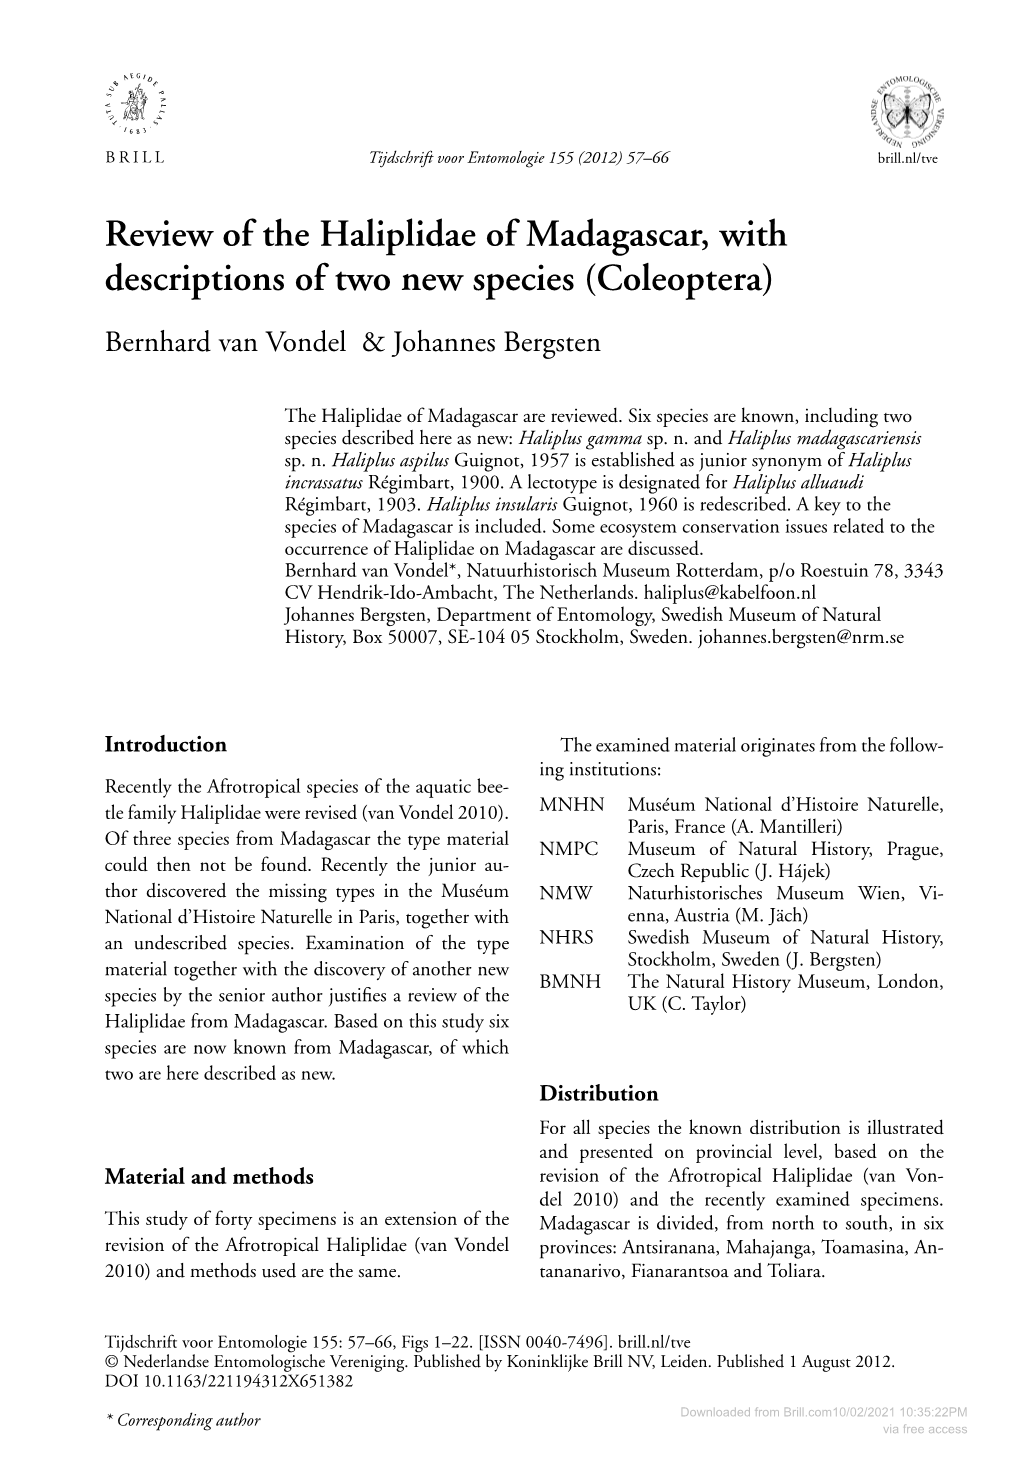 Review of the Haliplidae of Madagascar, with Descriptions of Two New Species (Coleoptera) Bernhard Van Vondel & Johannes Bergsten